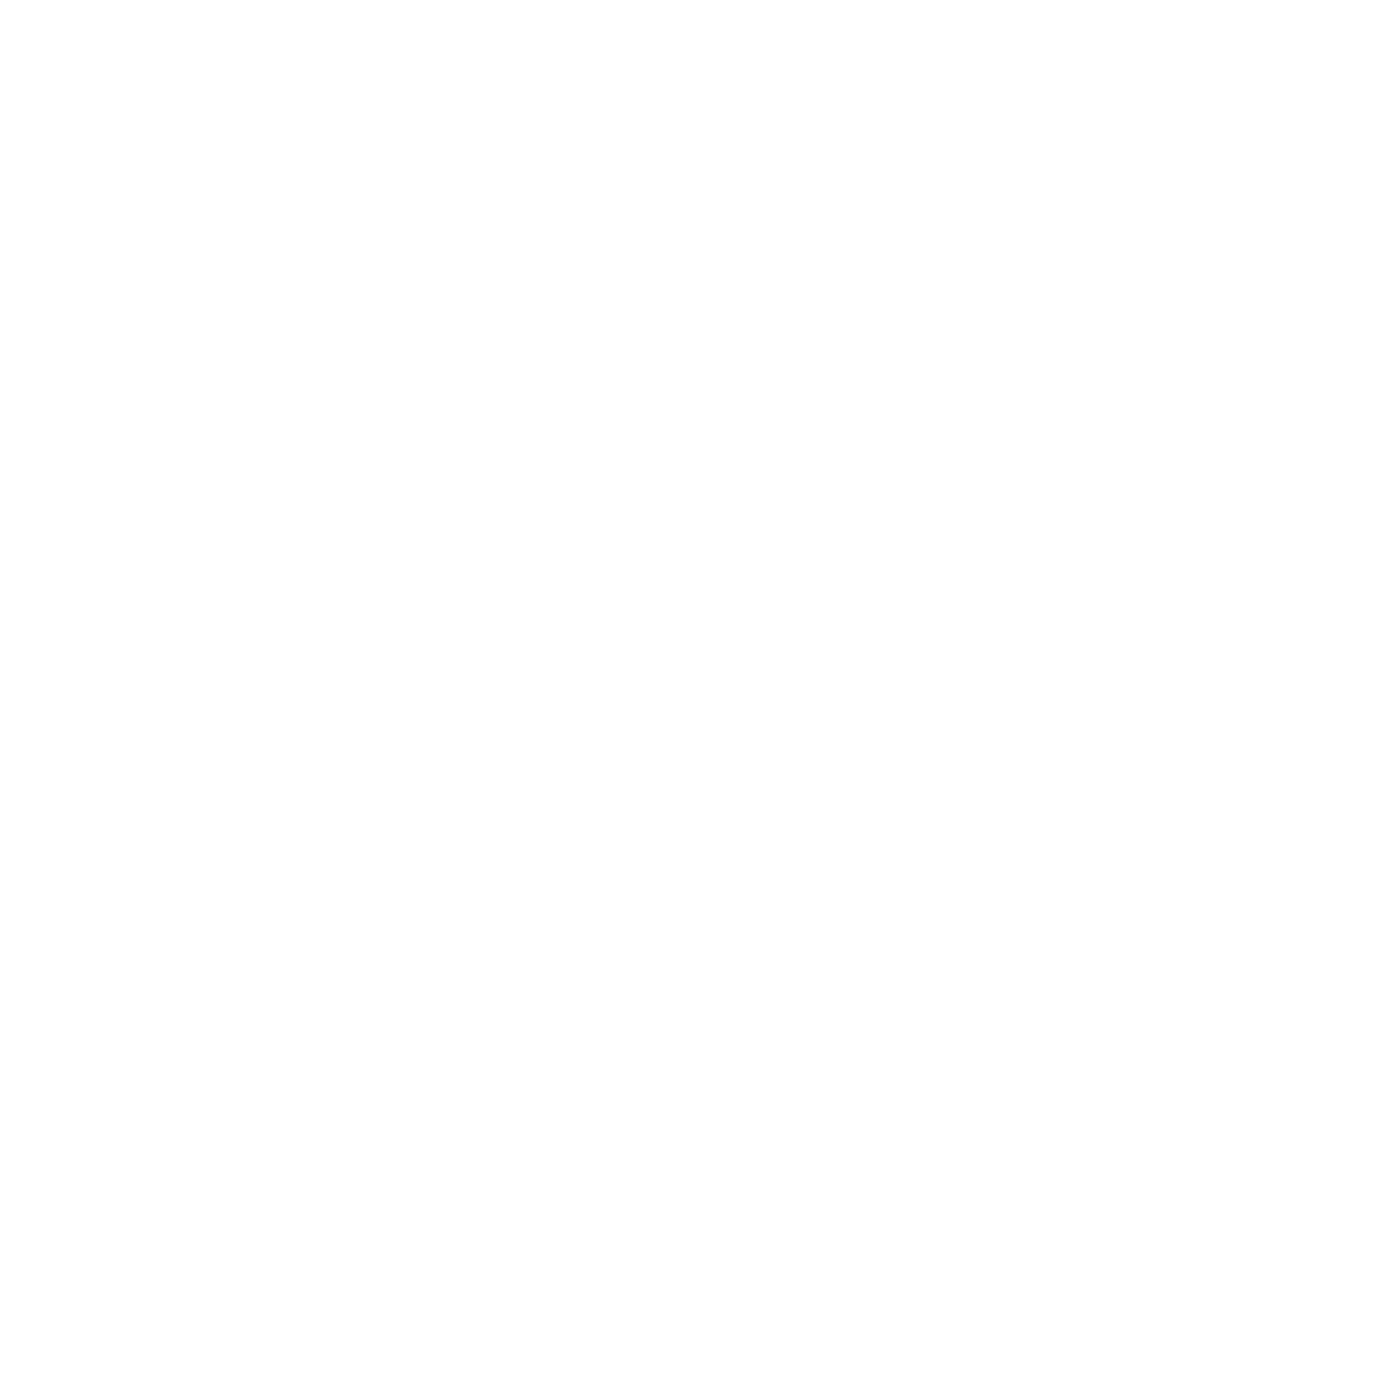 waspbet gaming - HacksawGaming